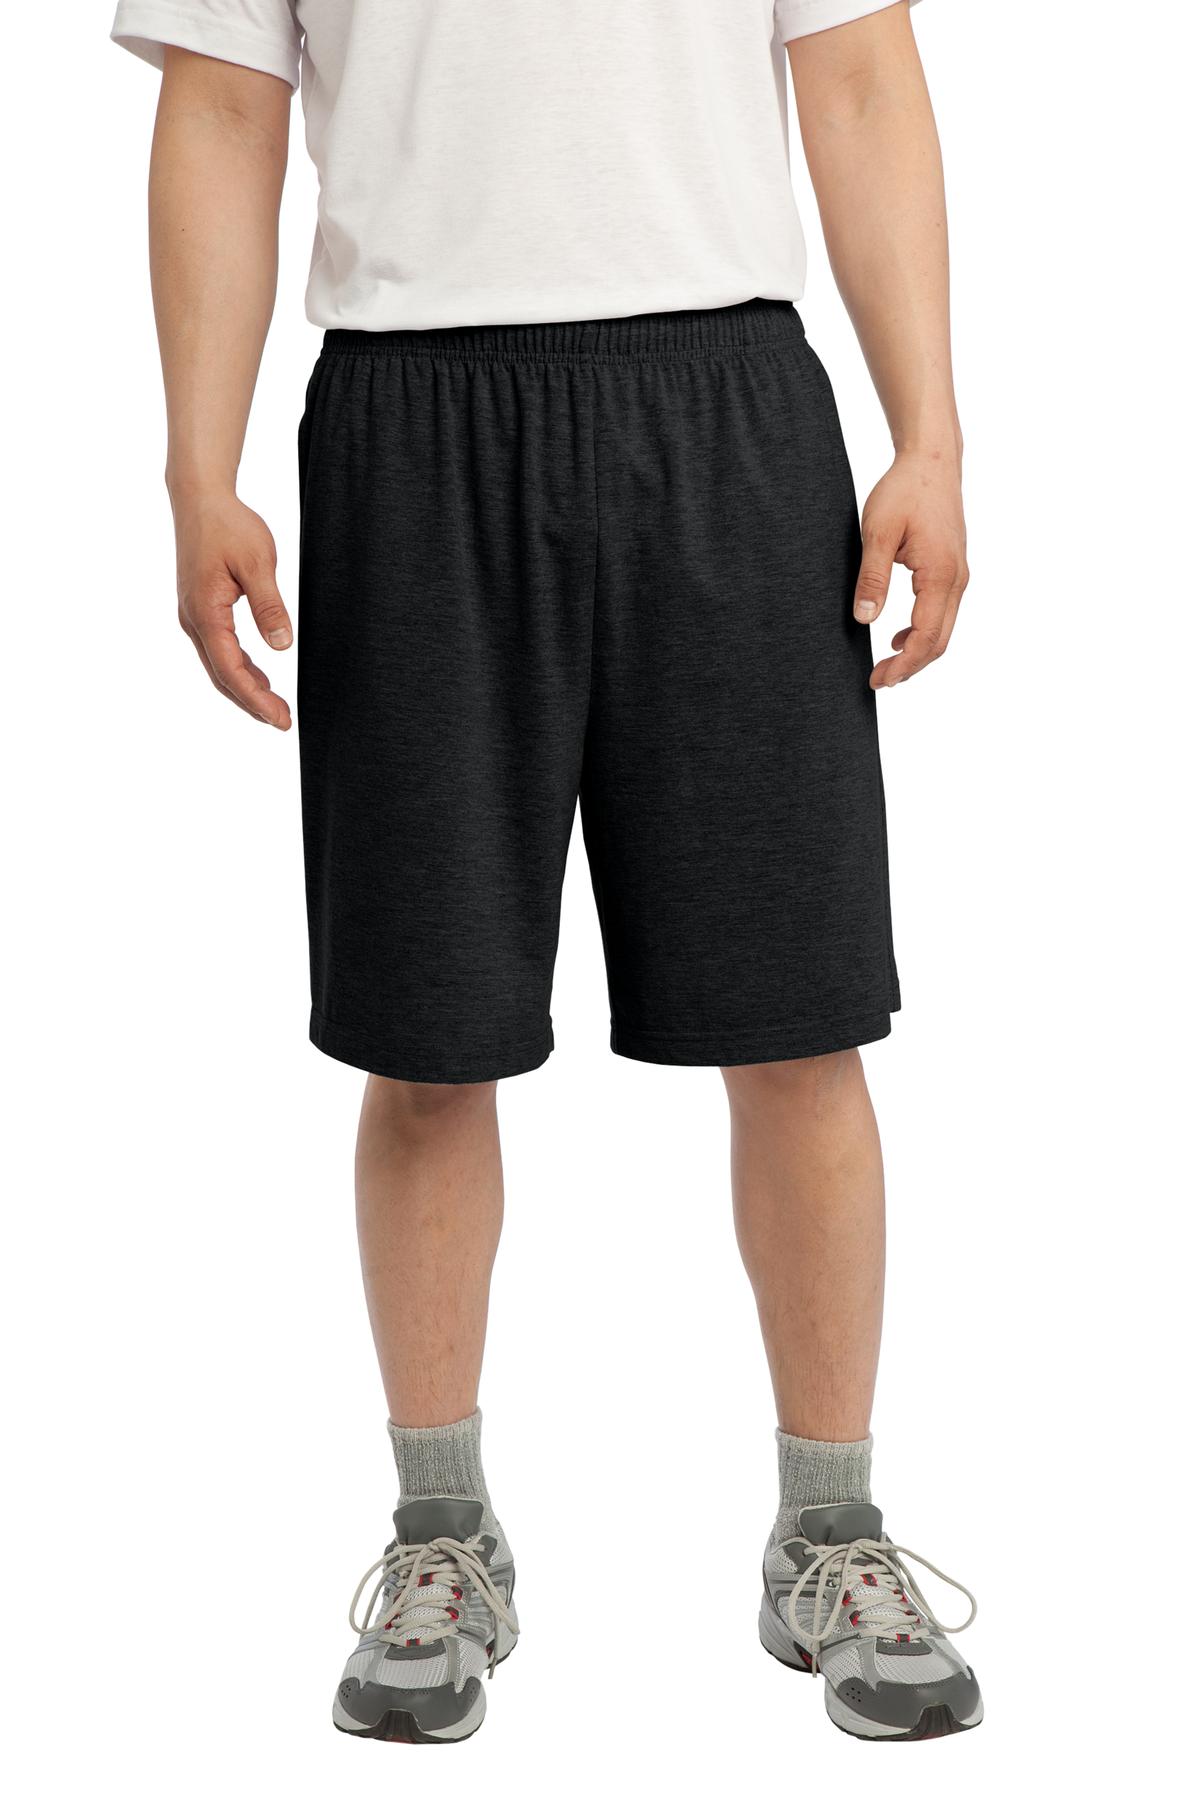 Sport-Tek Hospitality Activewear ® Jersey Knit Short with Pockets.-Sport-Tek